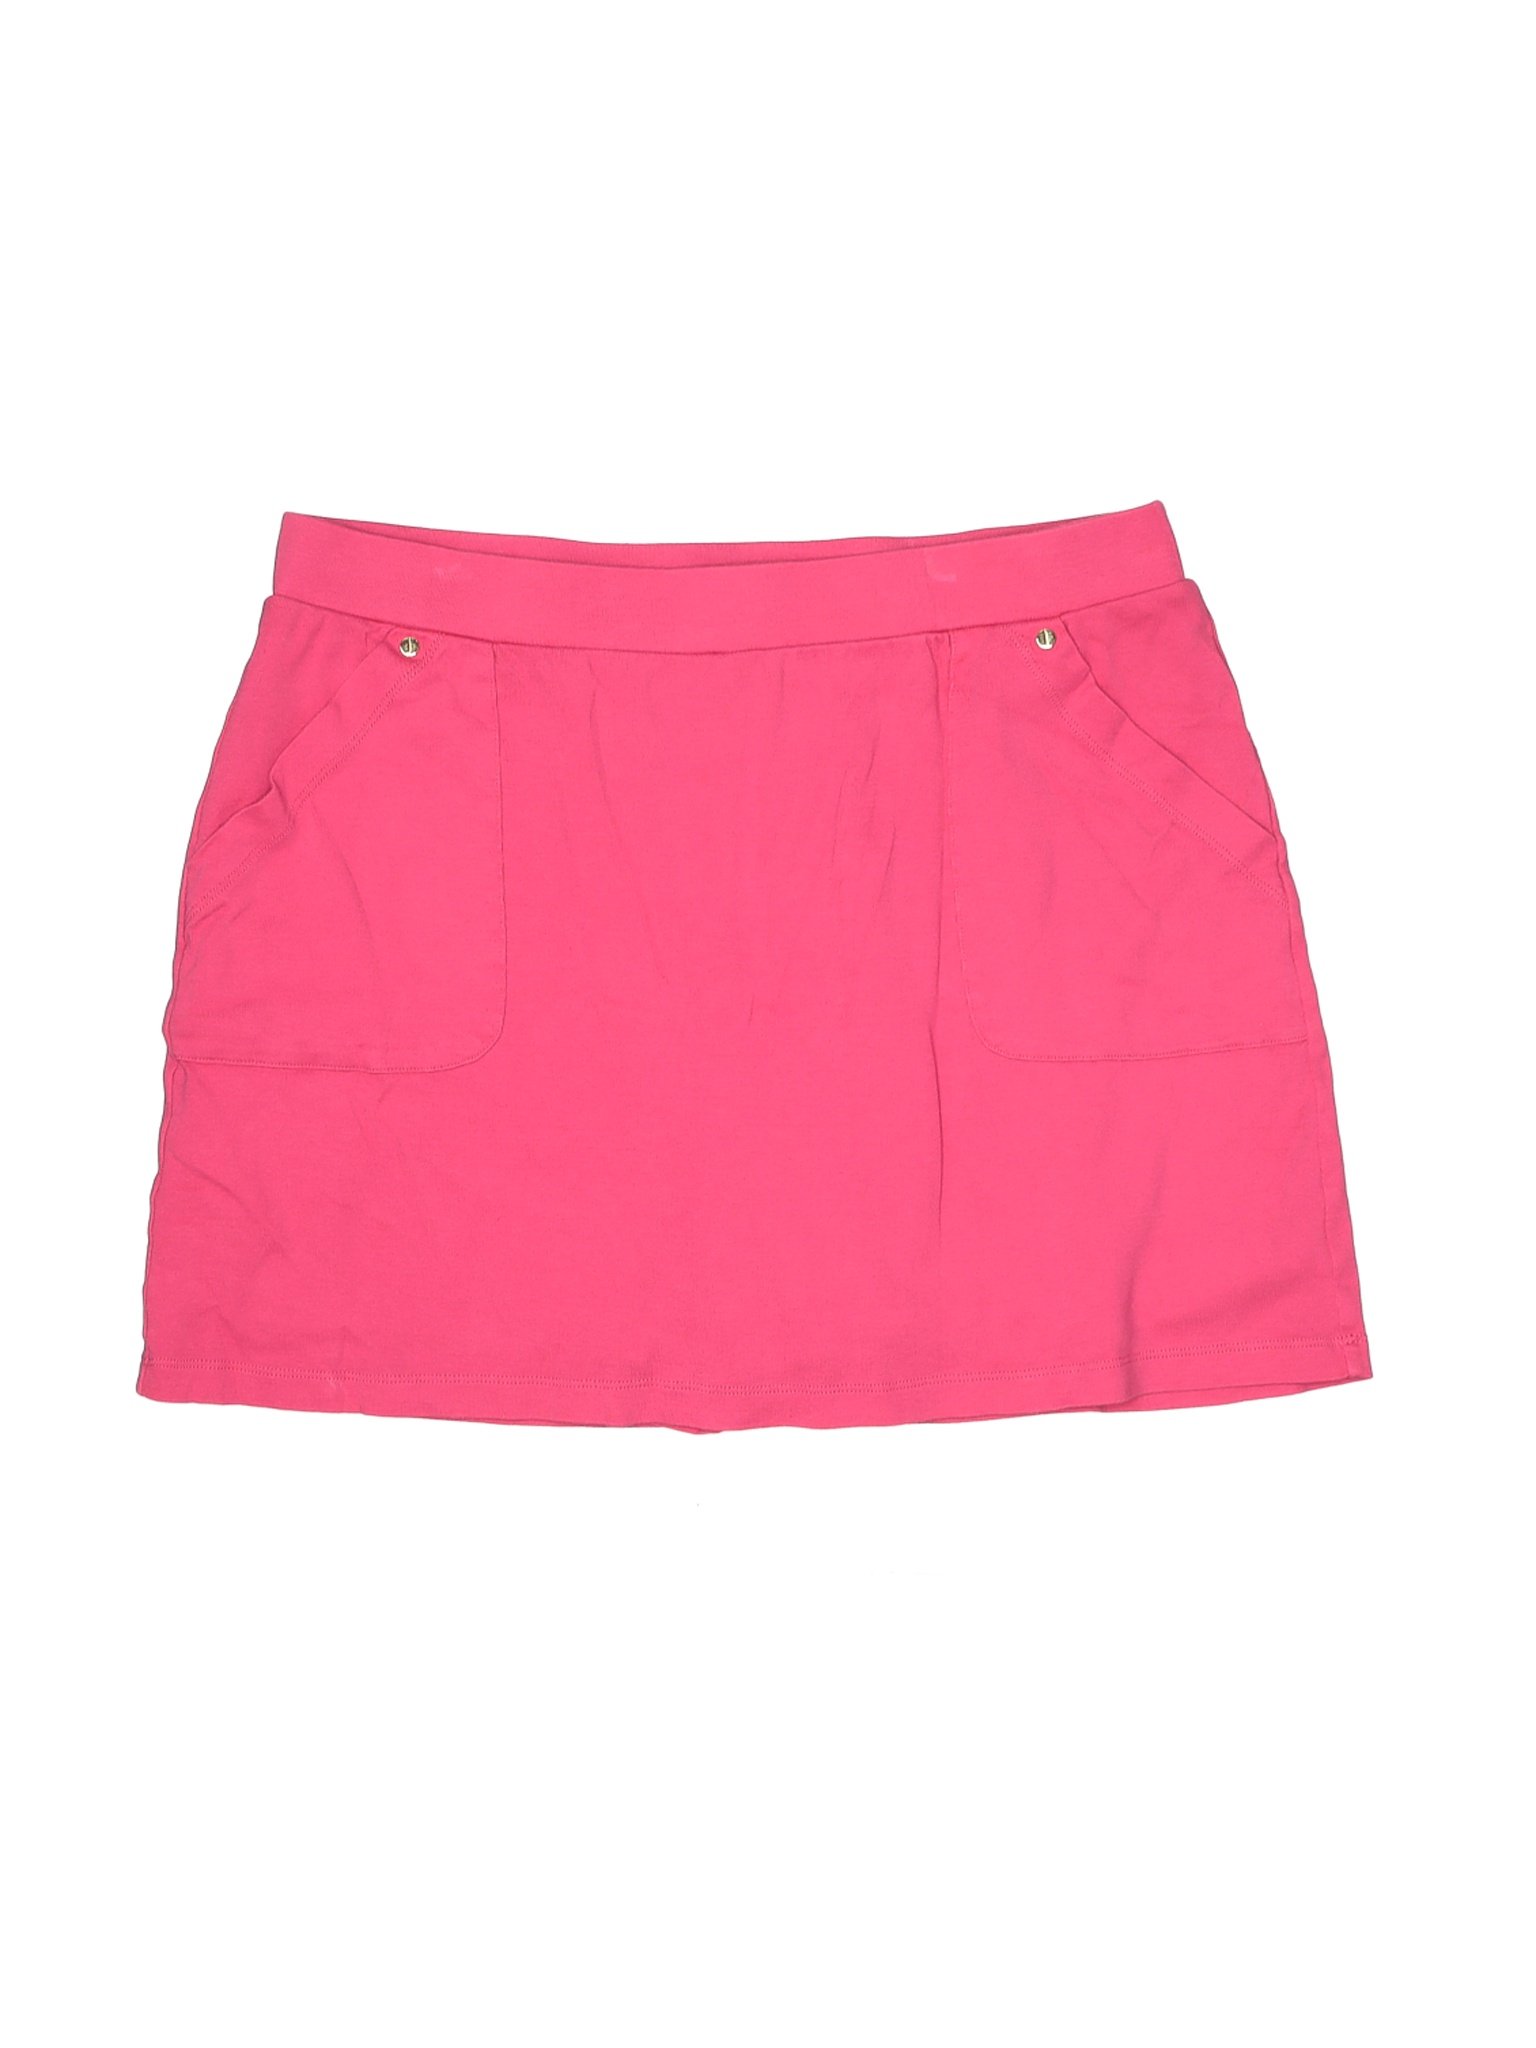 Jones New York Women Pink Skort L | eBay